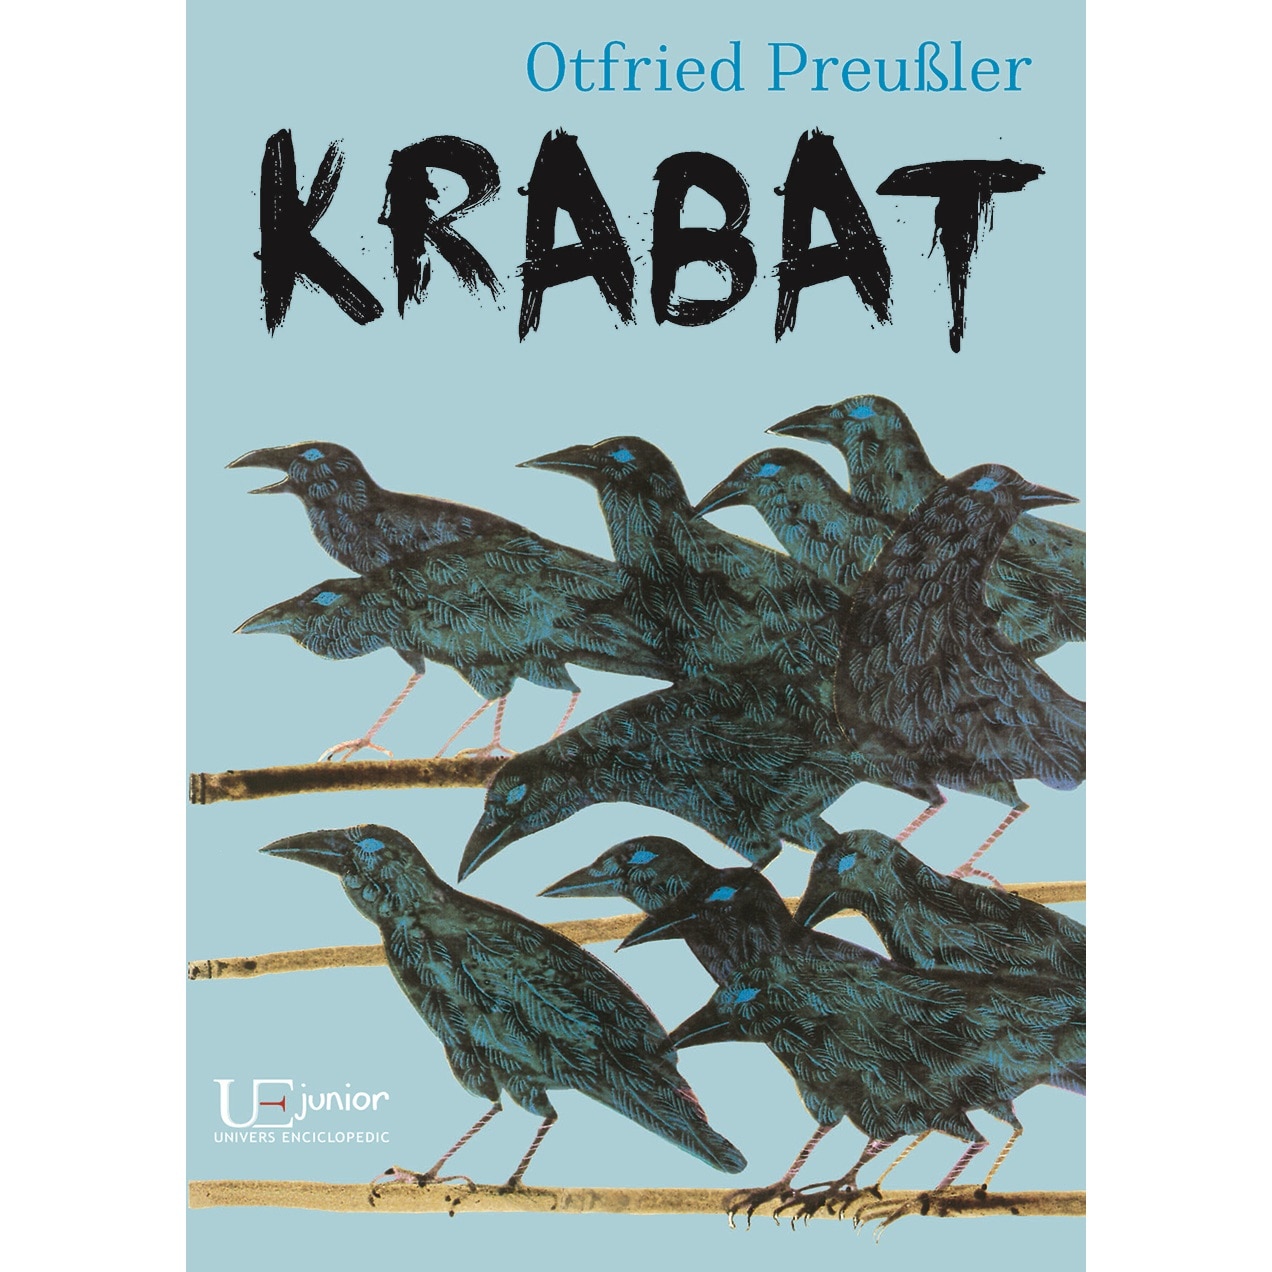 Krabat by Otfried Preußler